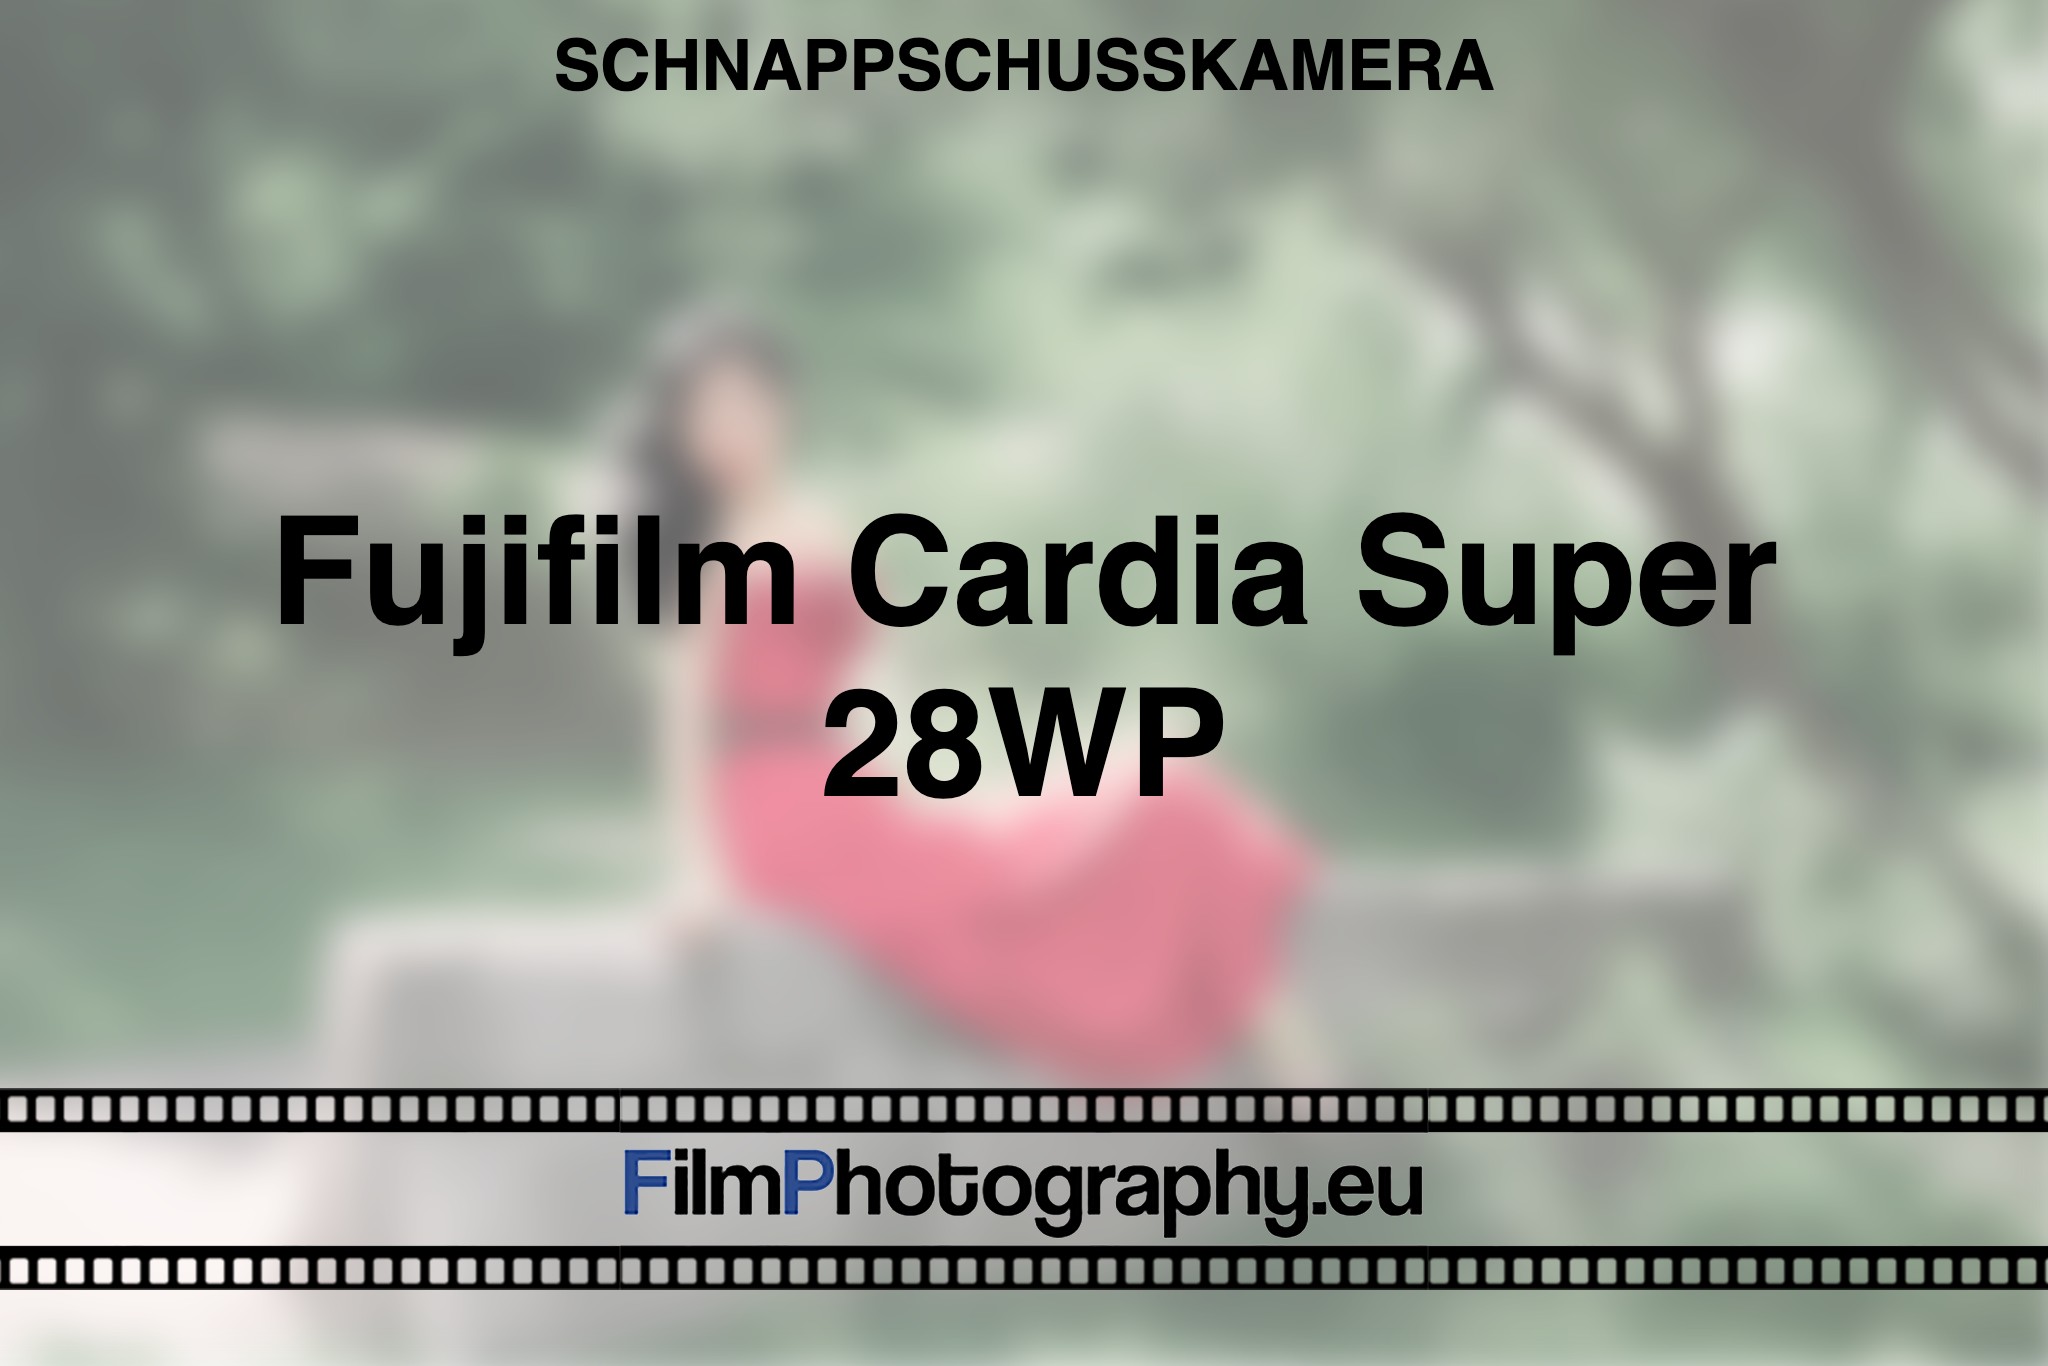 fujifilm-cardia-super-28wp-schnappschusskamera-bnv